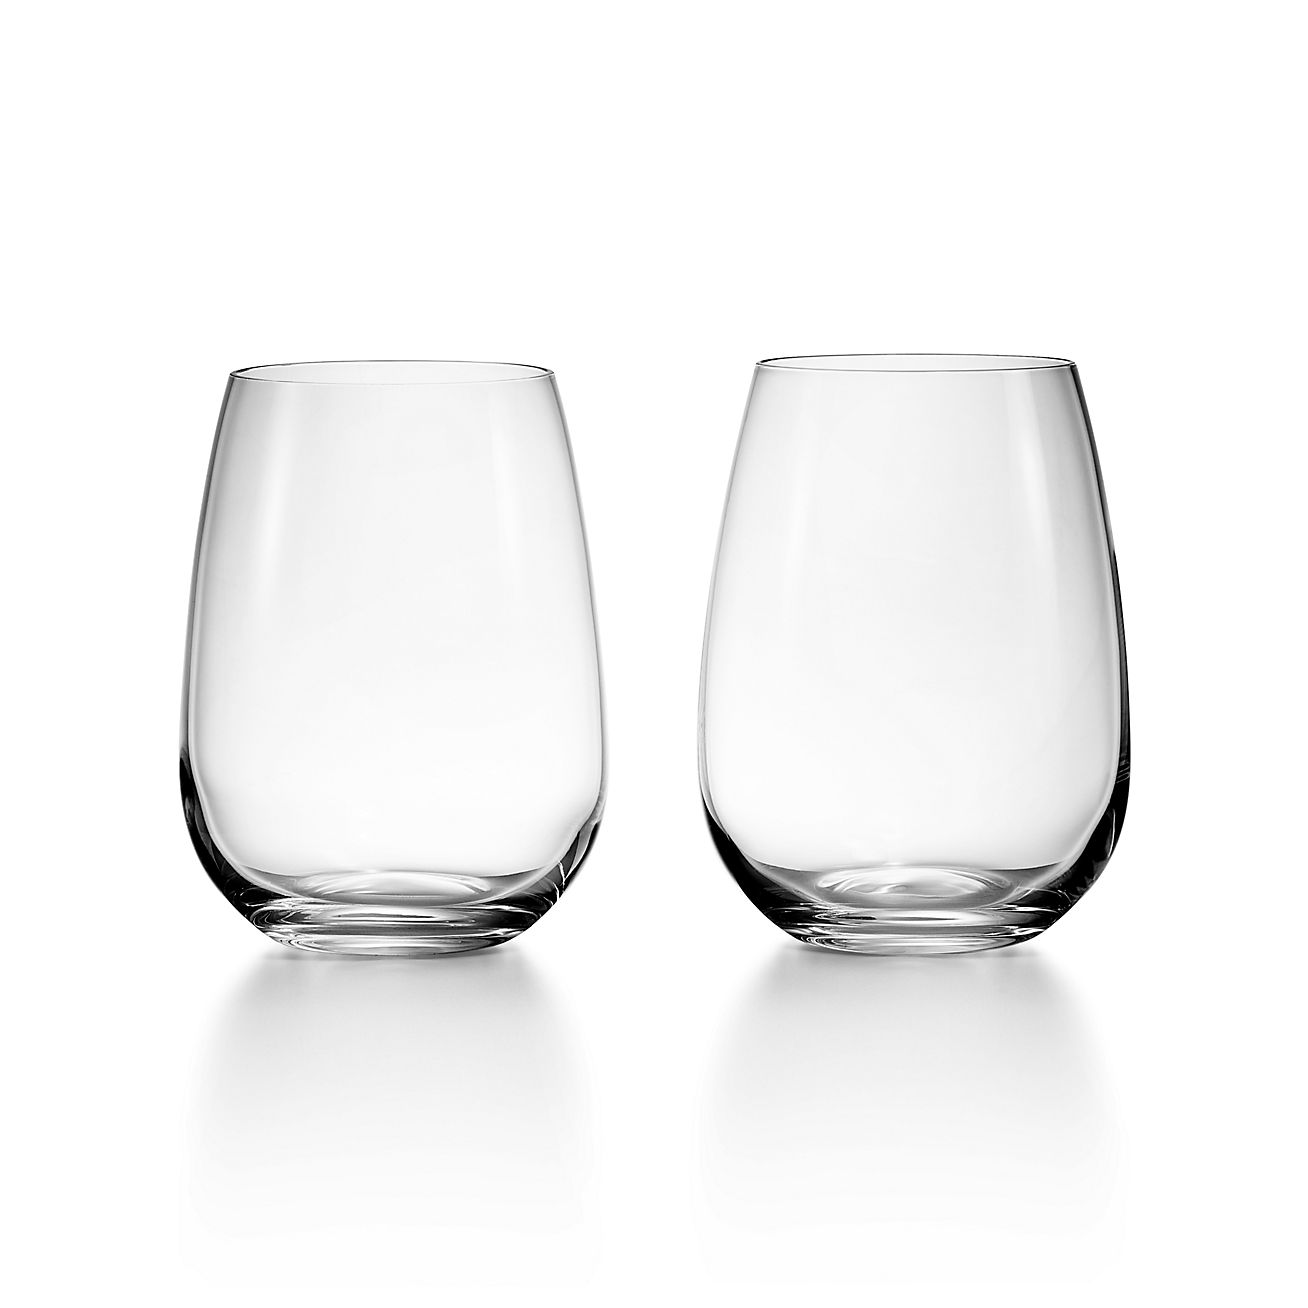 https://media.tiffany.com/is/image/Tiffany/EcomItemL2/tiffany-home-essentialsstemless-white-wine-glasses-72333144_1048387_ED.jpg